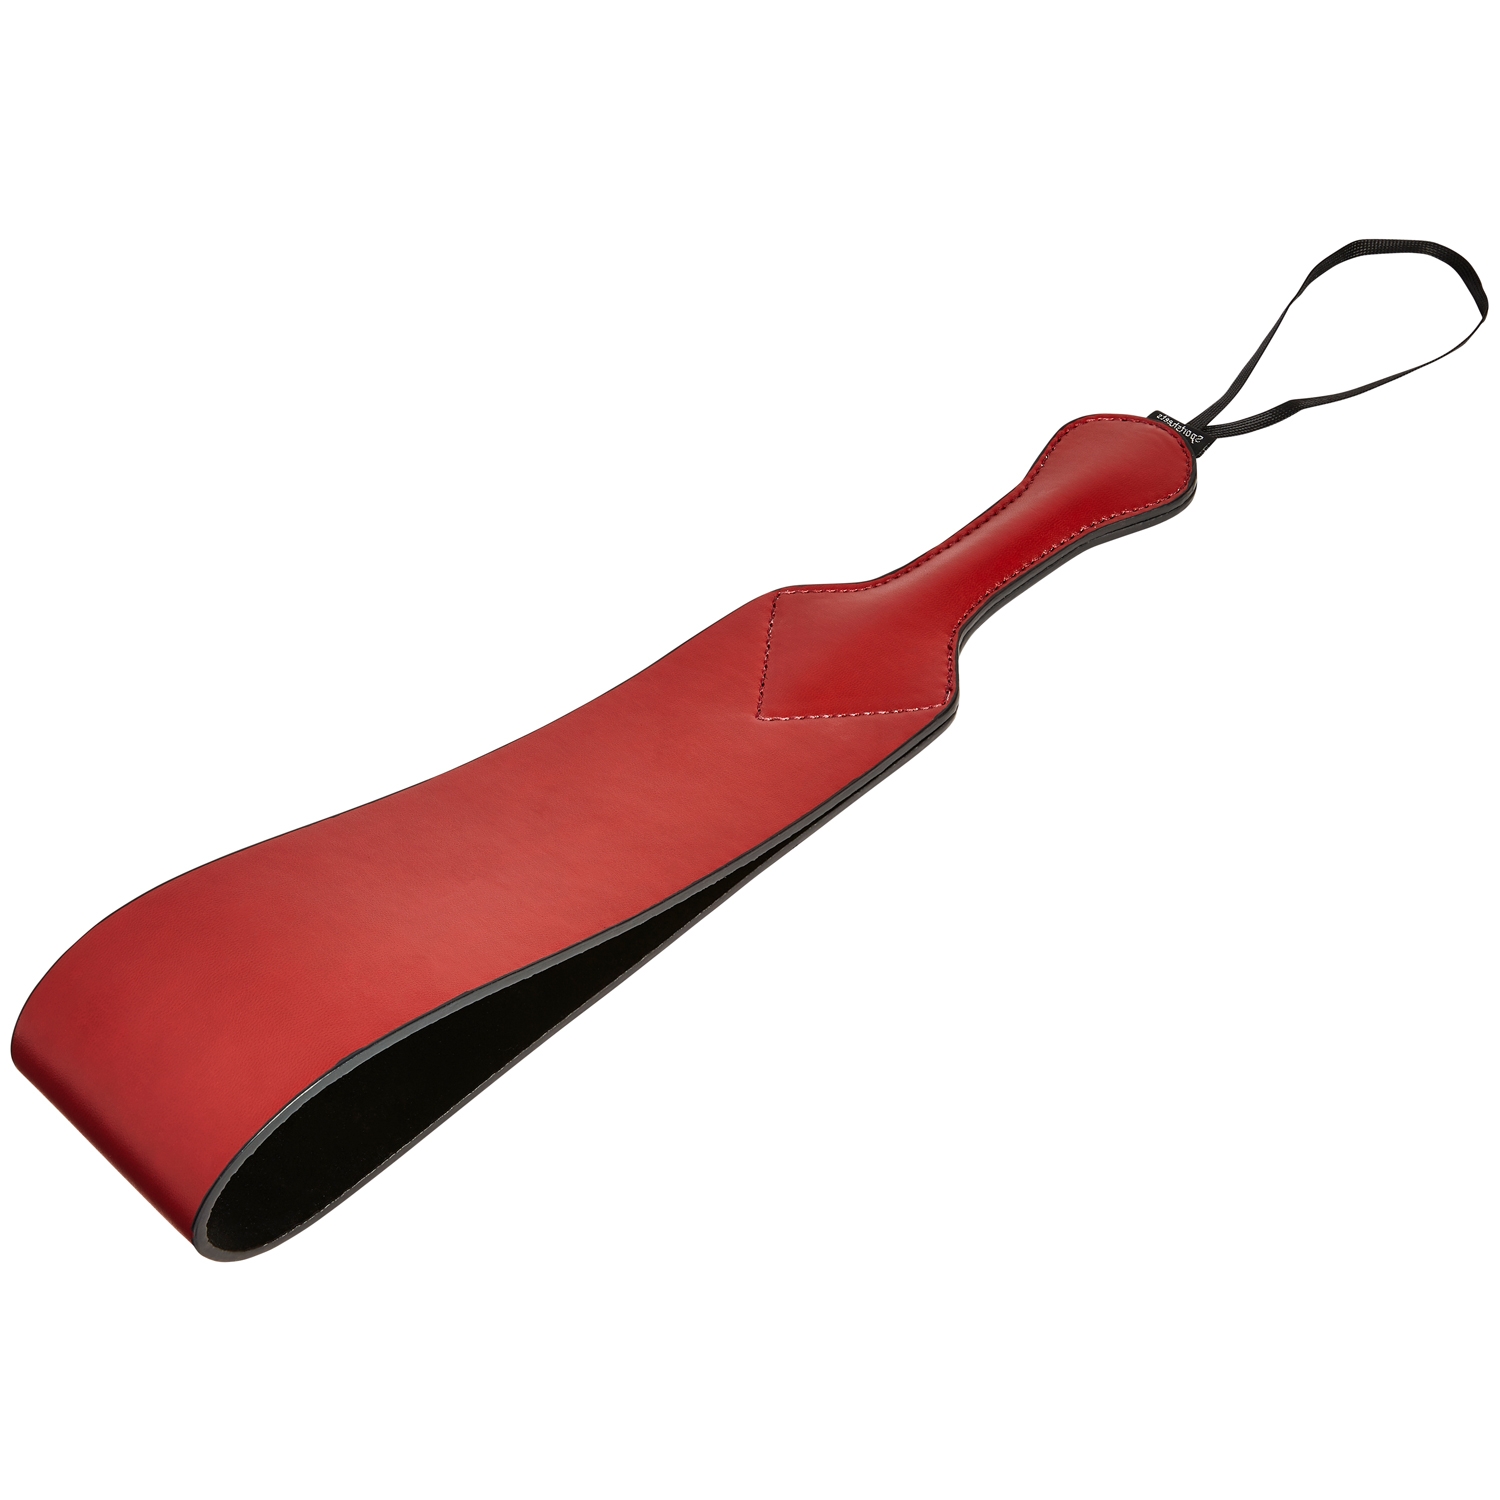 Sportsheets Saffron Loop Paddle - Red